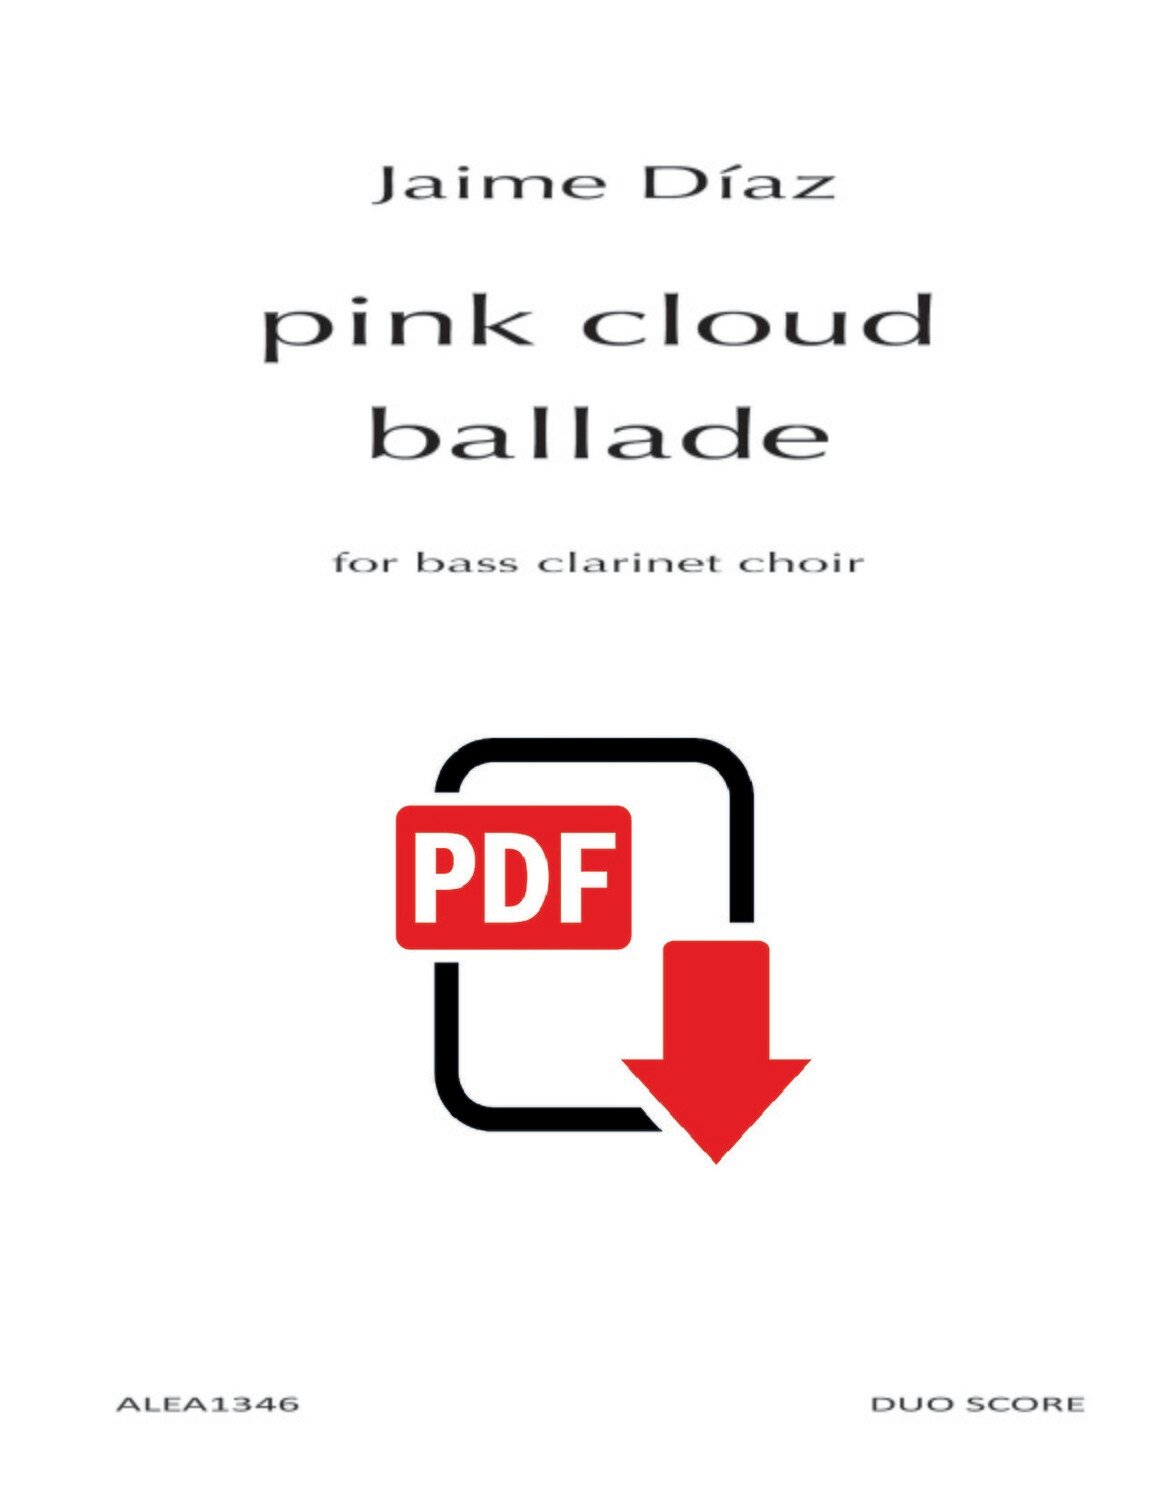 Diaz: pink cloud ballade (PDF)